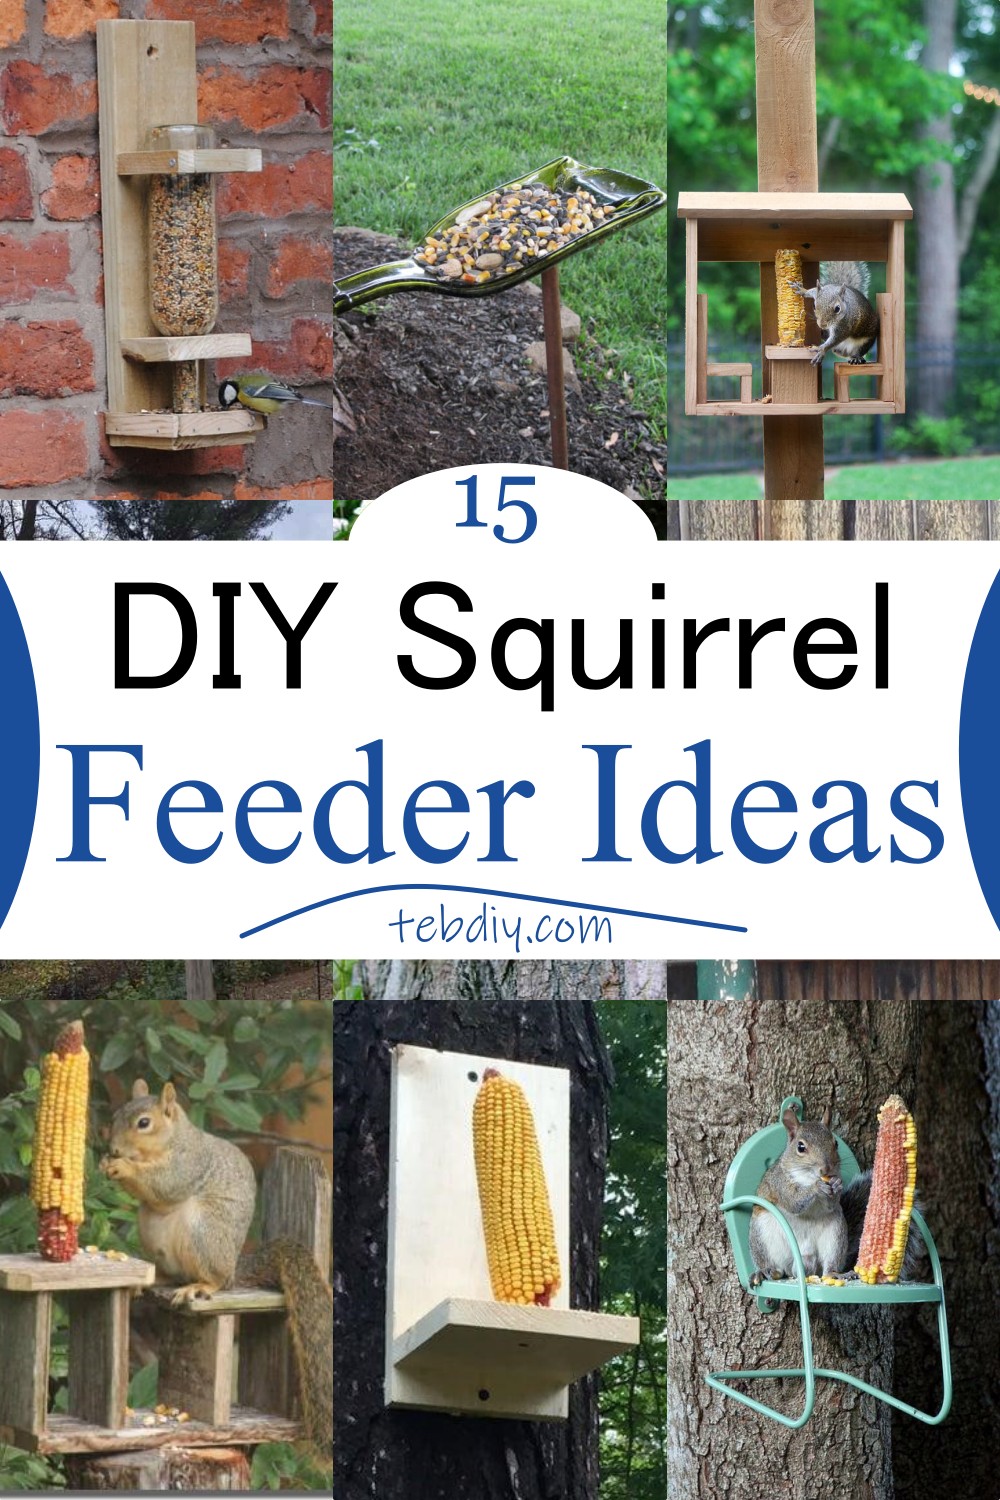 15 DIY Squirrel Feeder Ideas